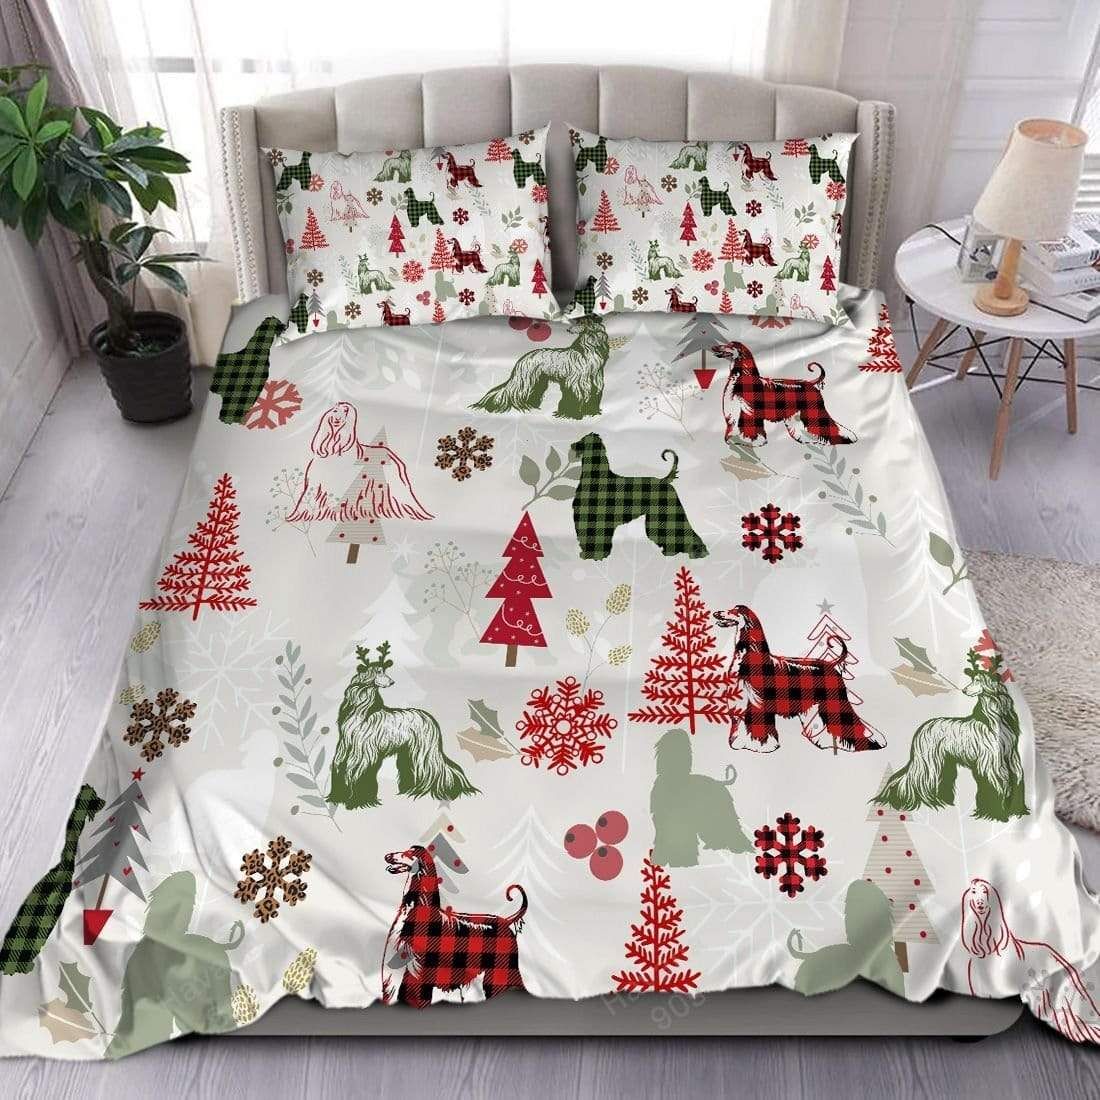 Afghan Hound Dog Christmas Duvet Cover Bedding Set